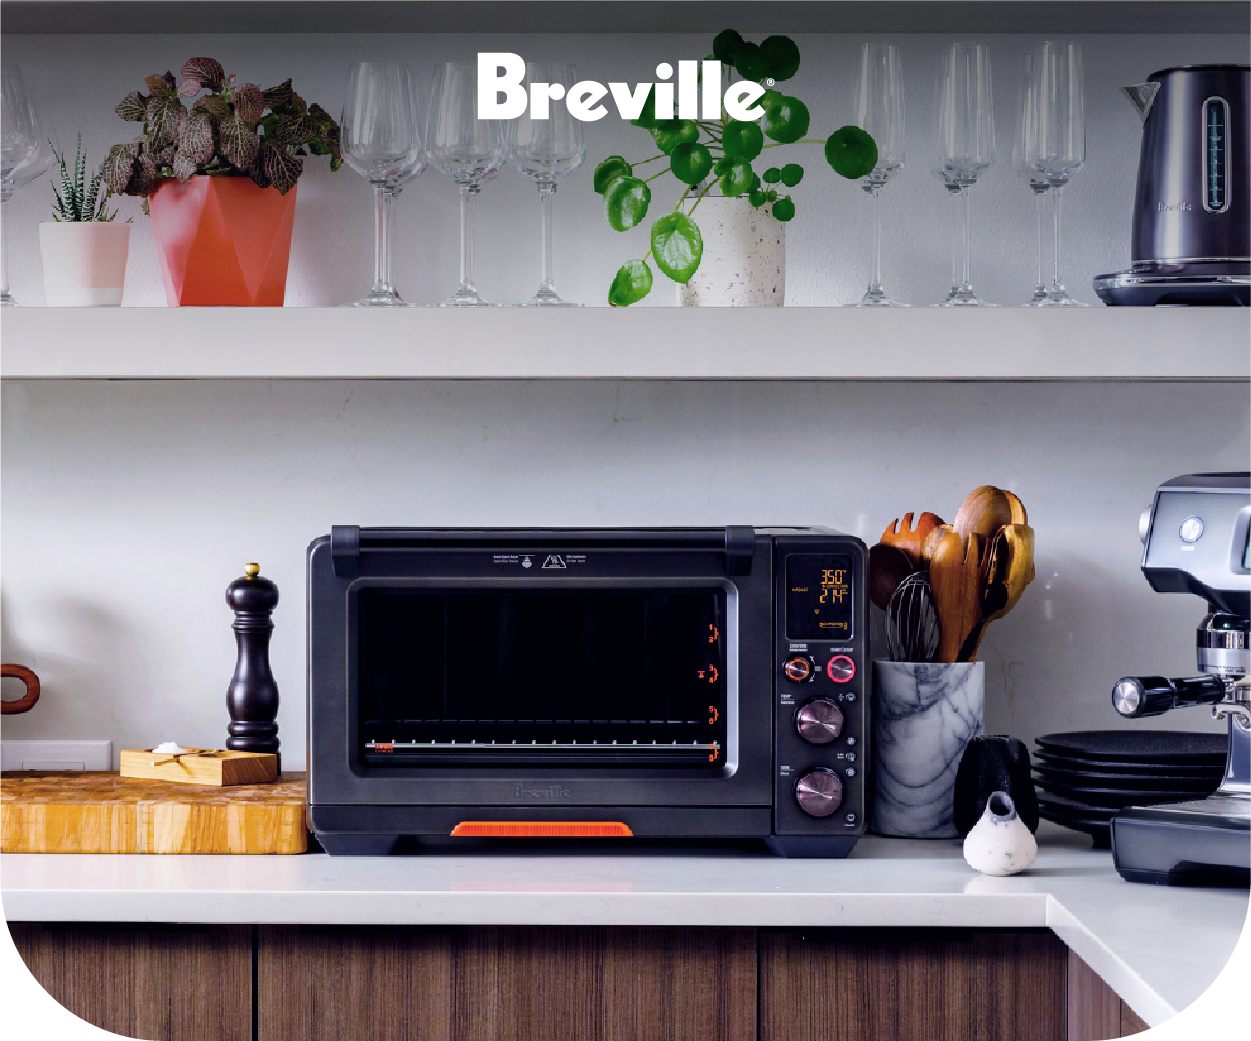 Breville: Meet the Joule Oven Air Fryer Pro